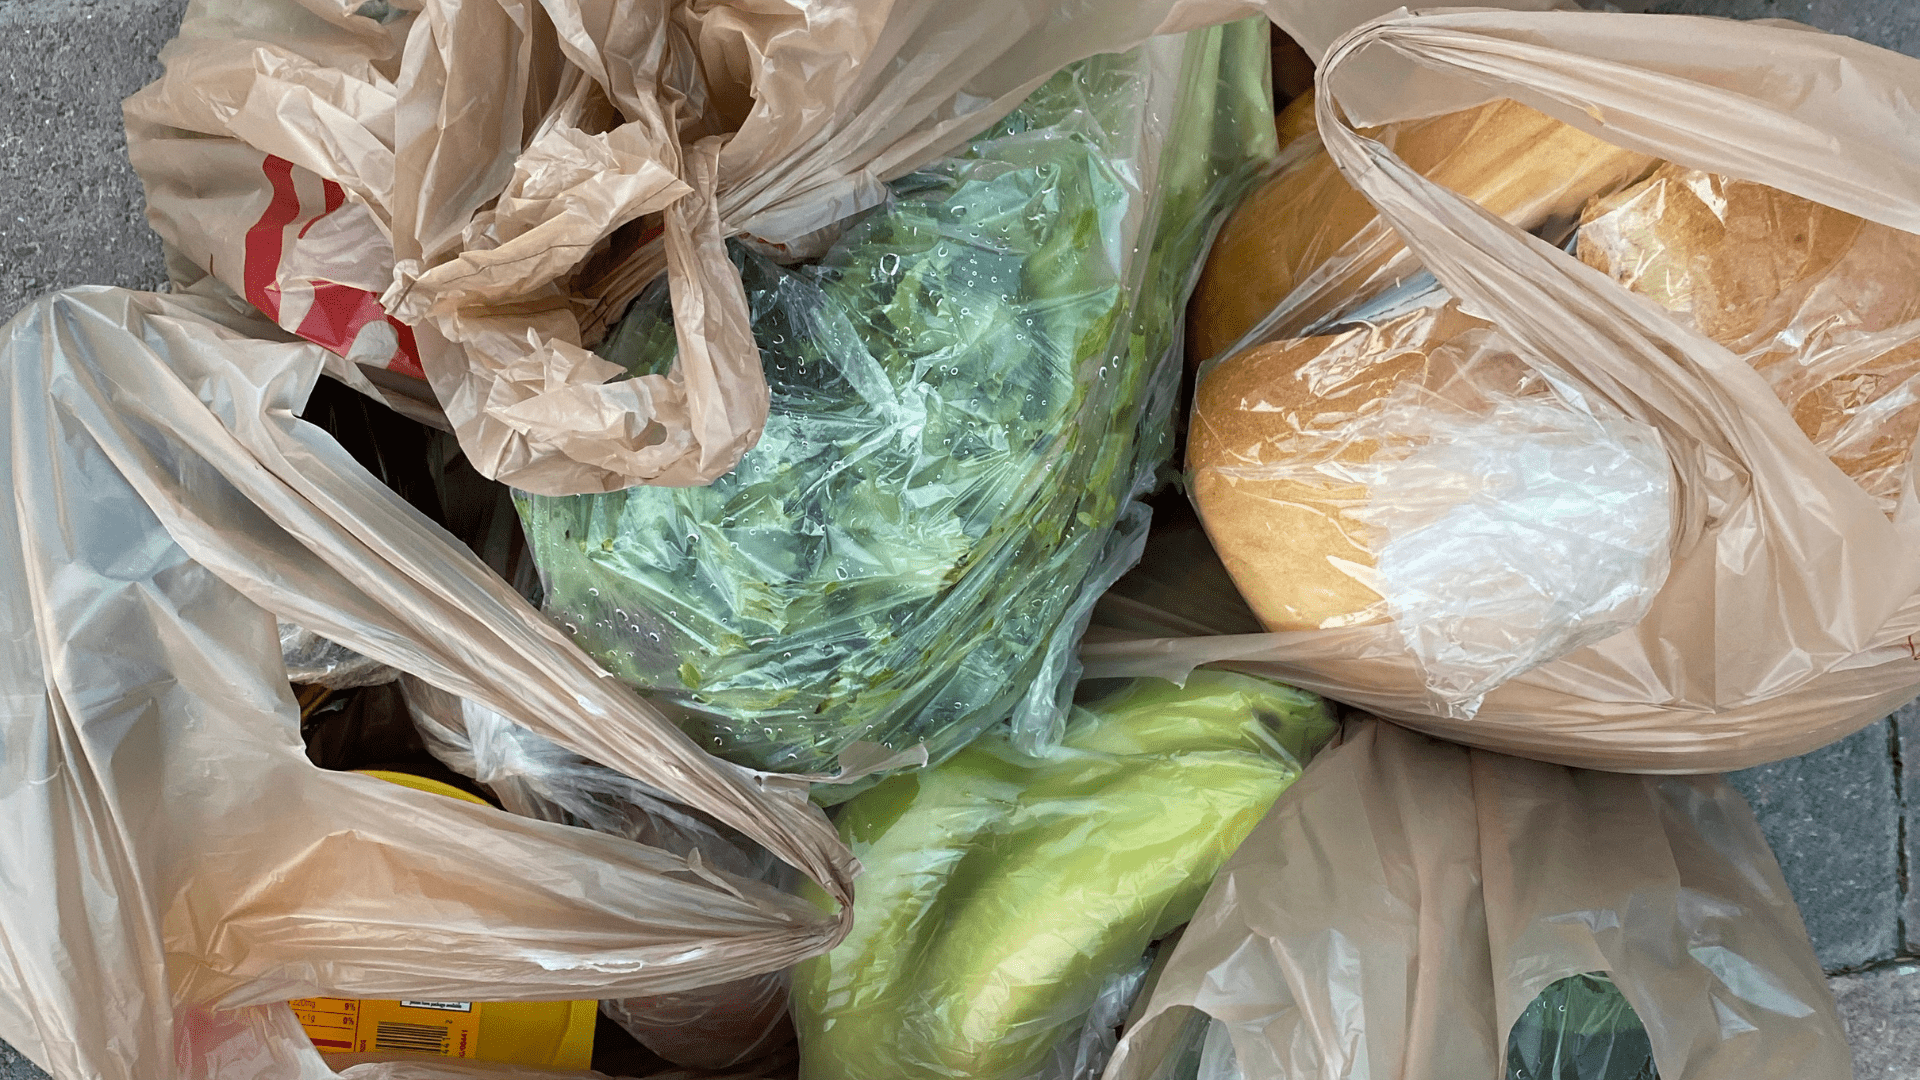 groceries in plastic bags